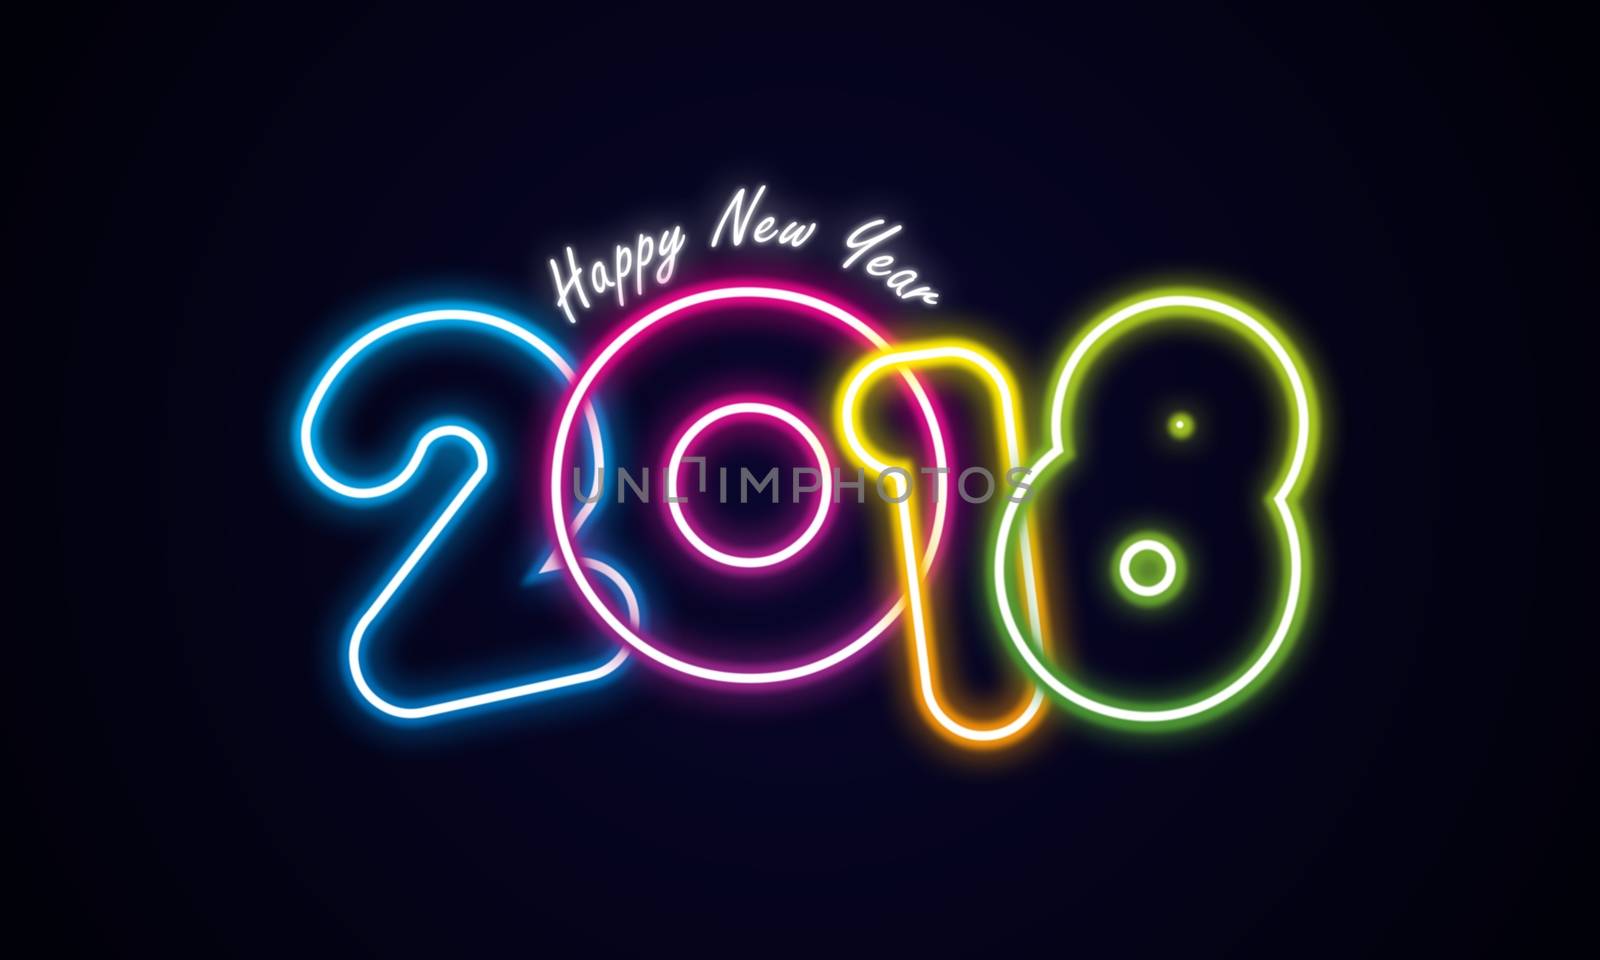 Happy new year 2018 by nicousnake